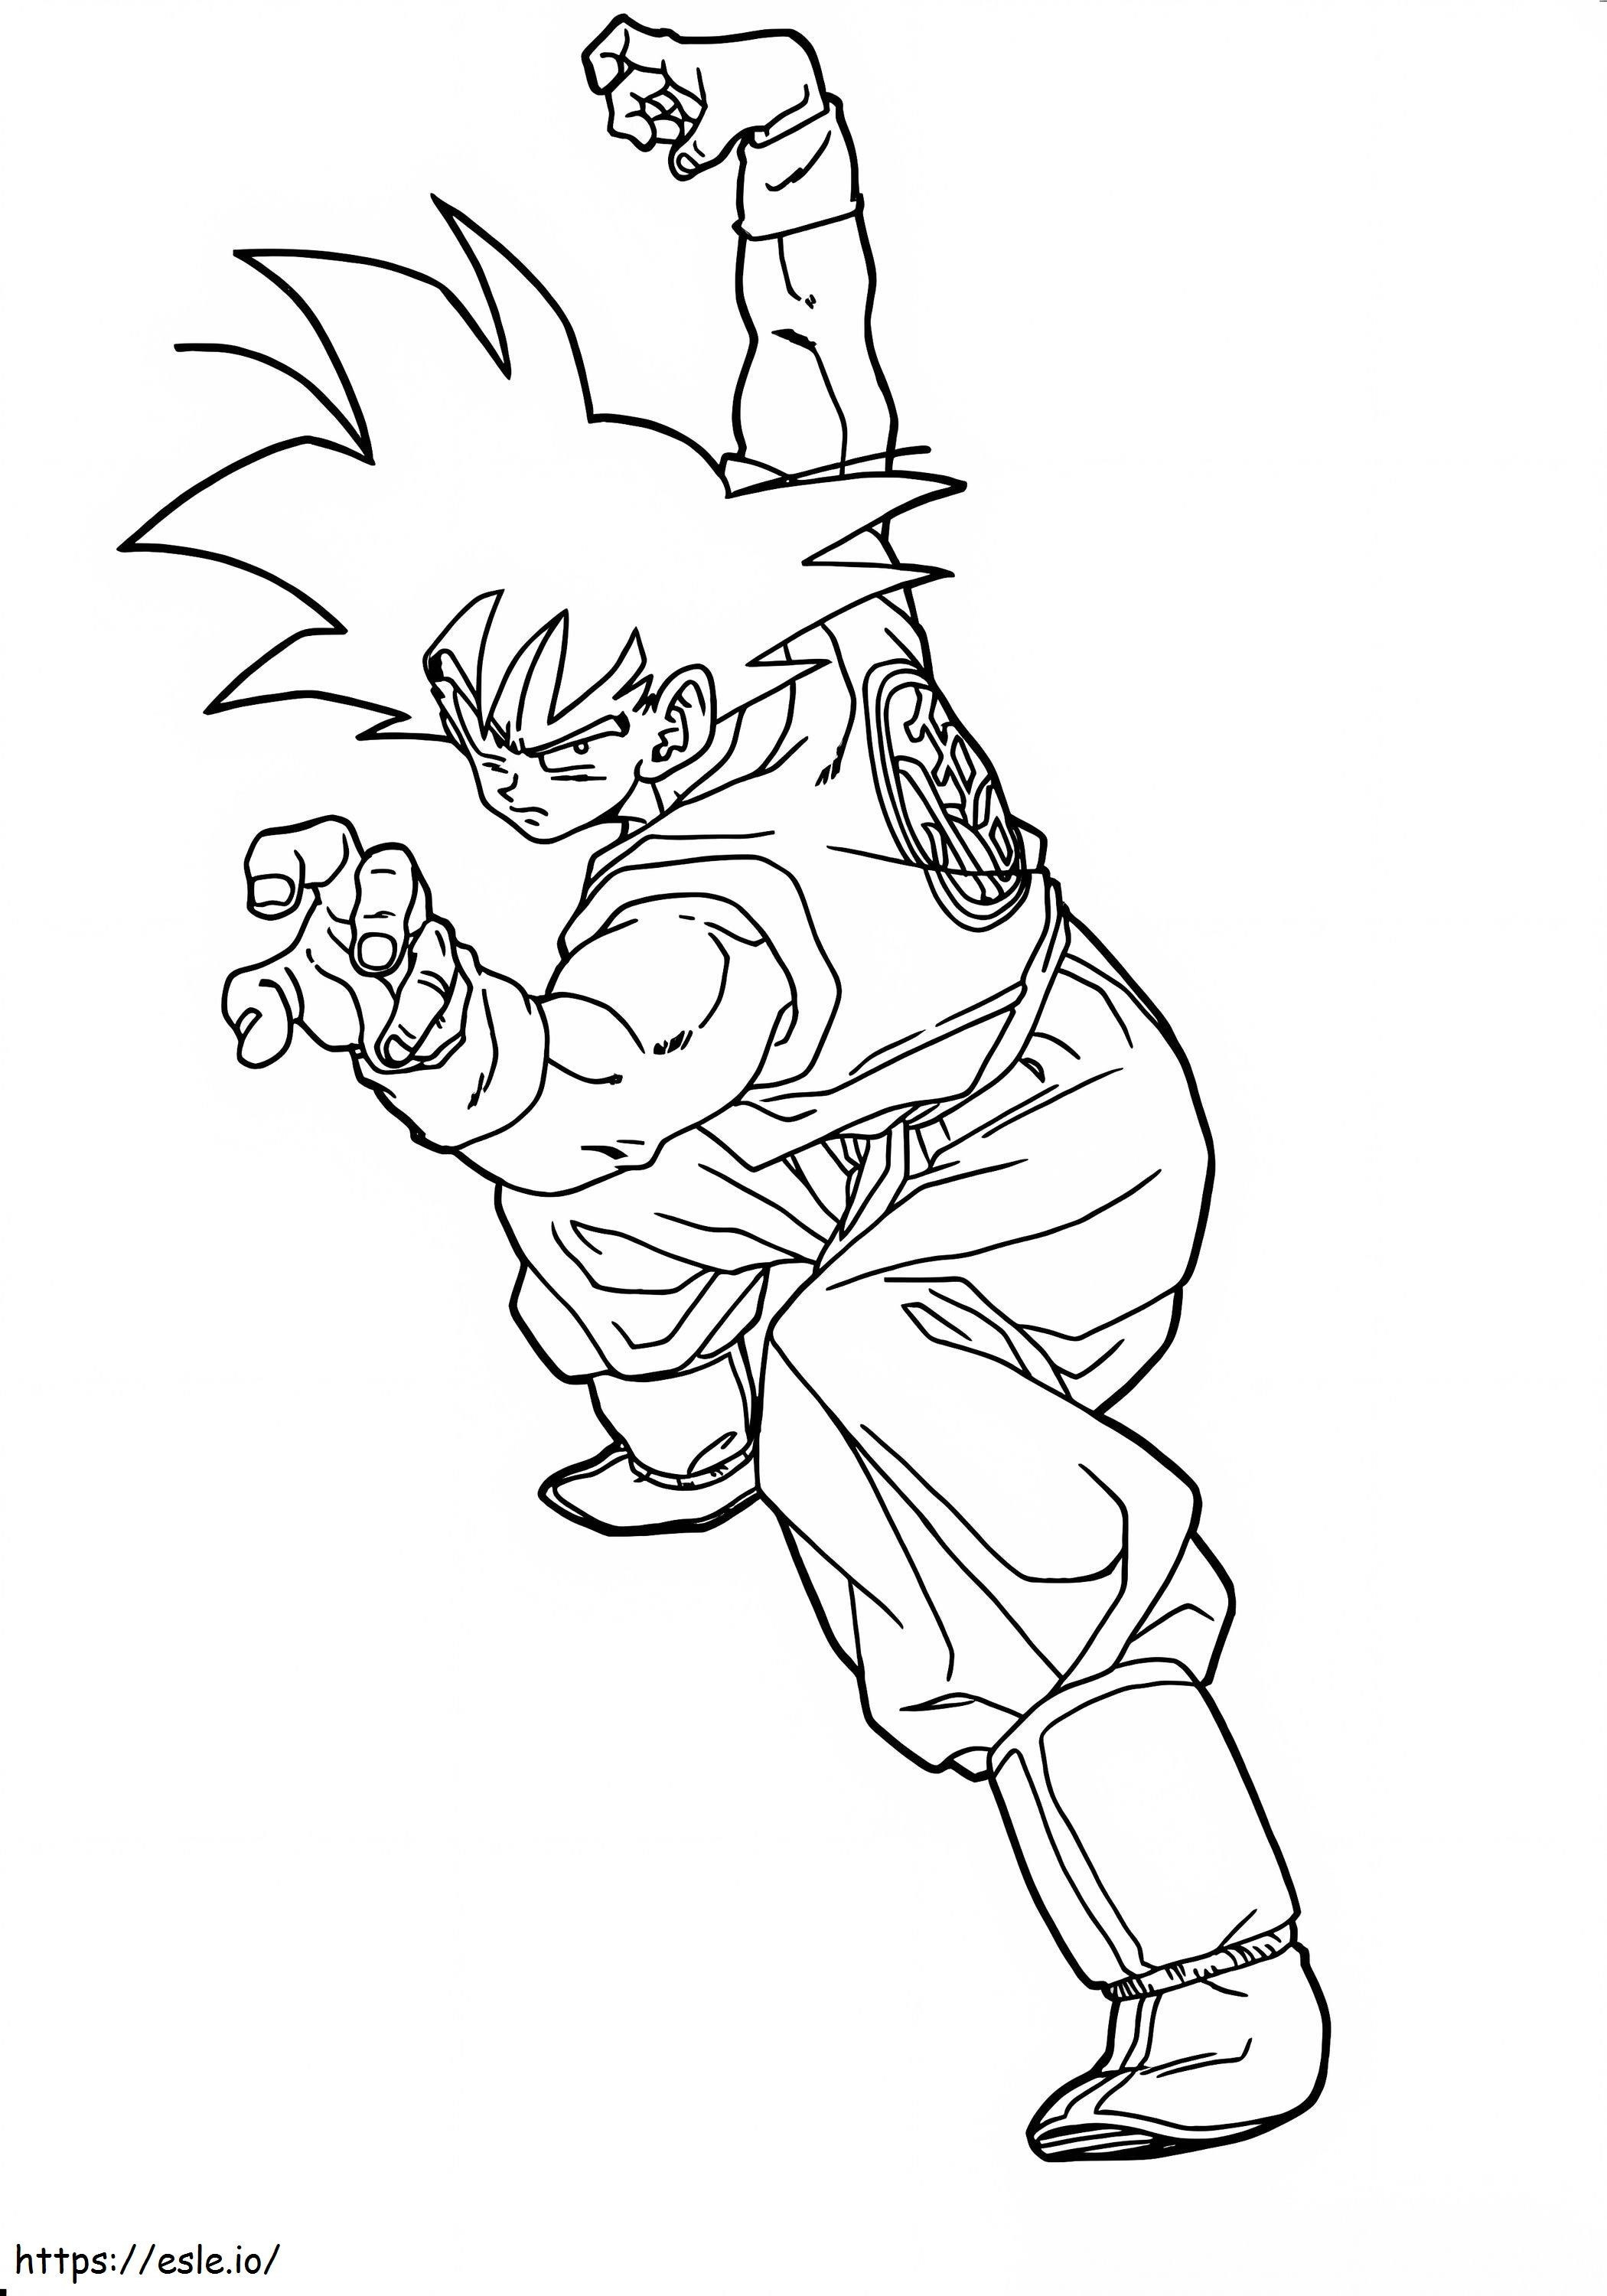 Coloriage Combat de Goku à imprimer dessin